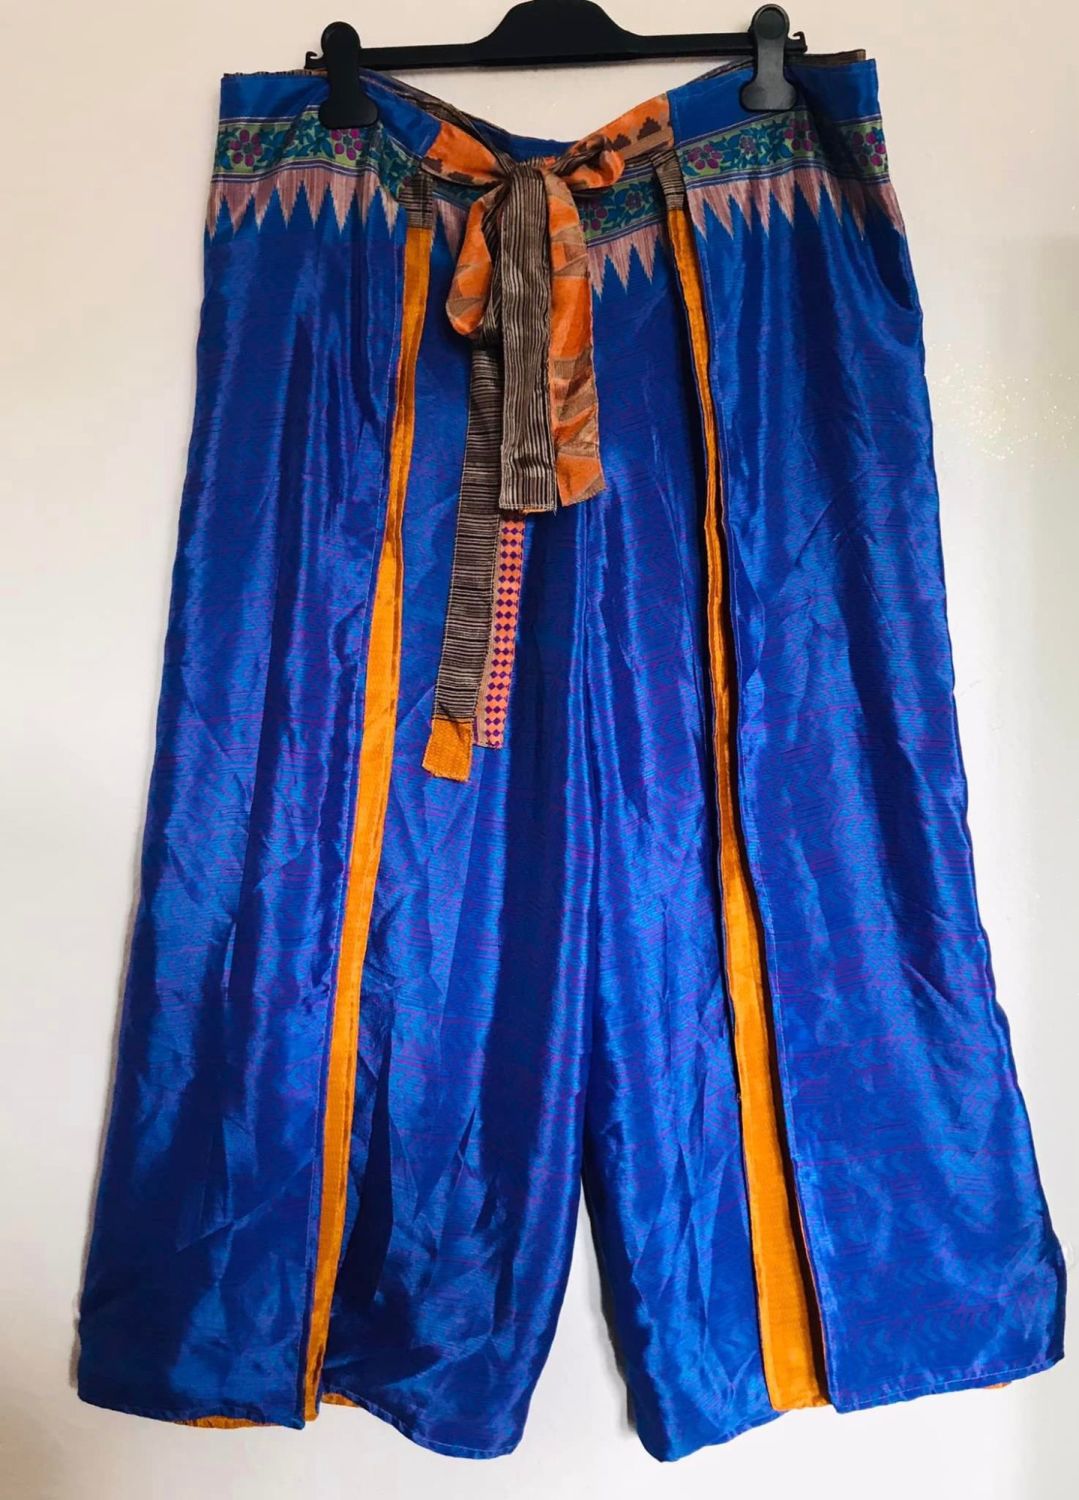 Gorgeous reversible magic thai pants